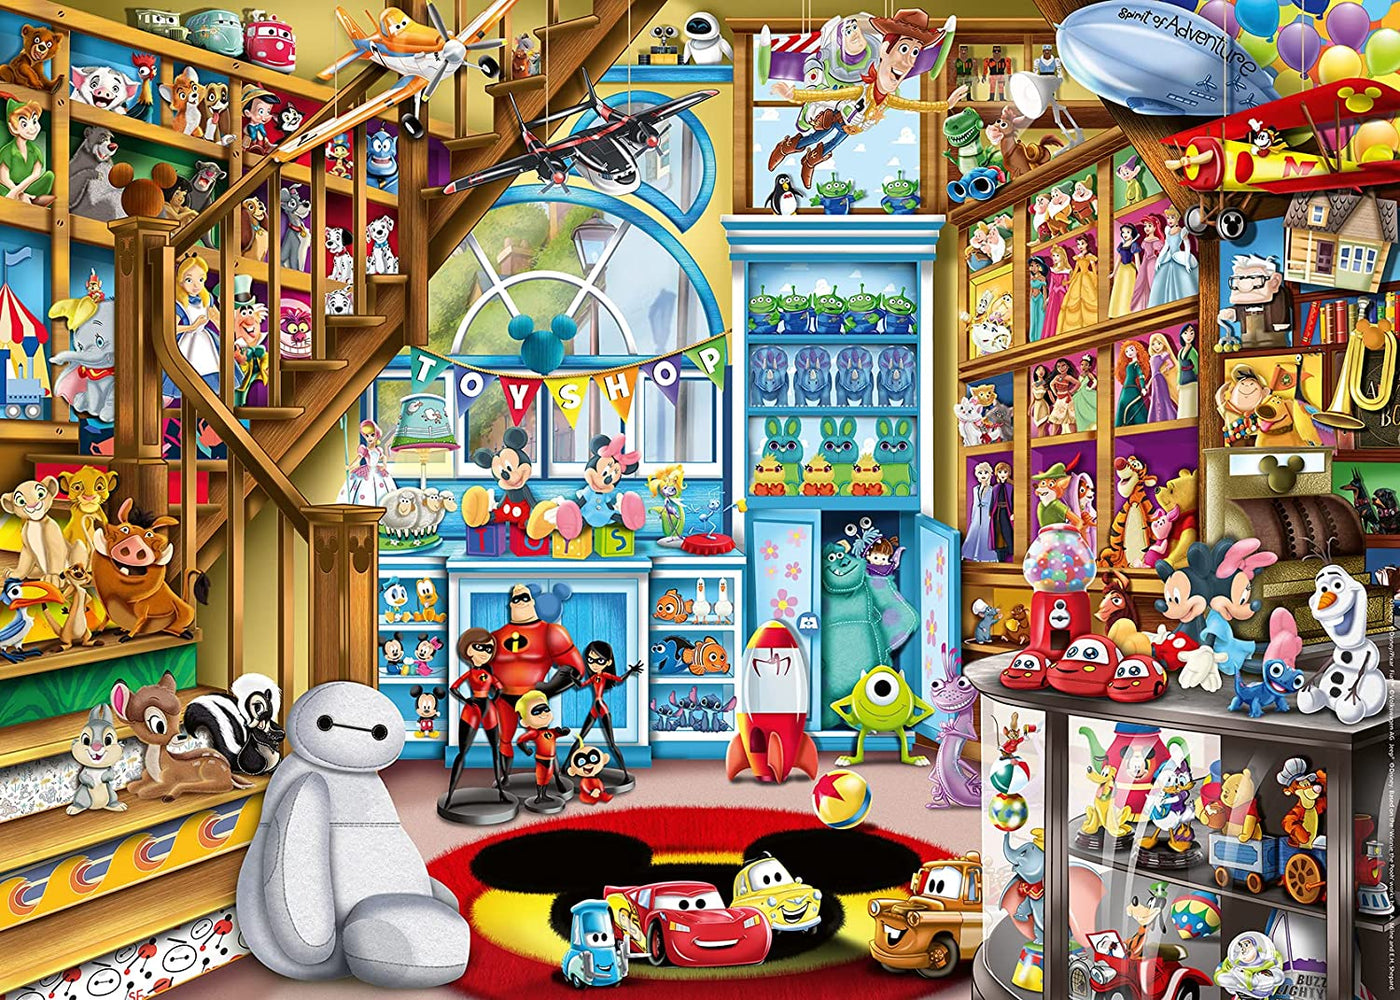 Disney & Pixar Toy Store - 1000 brikker